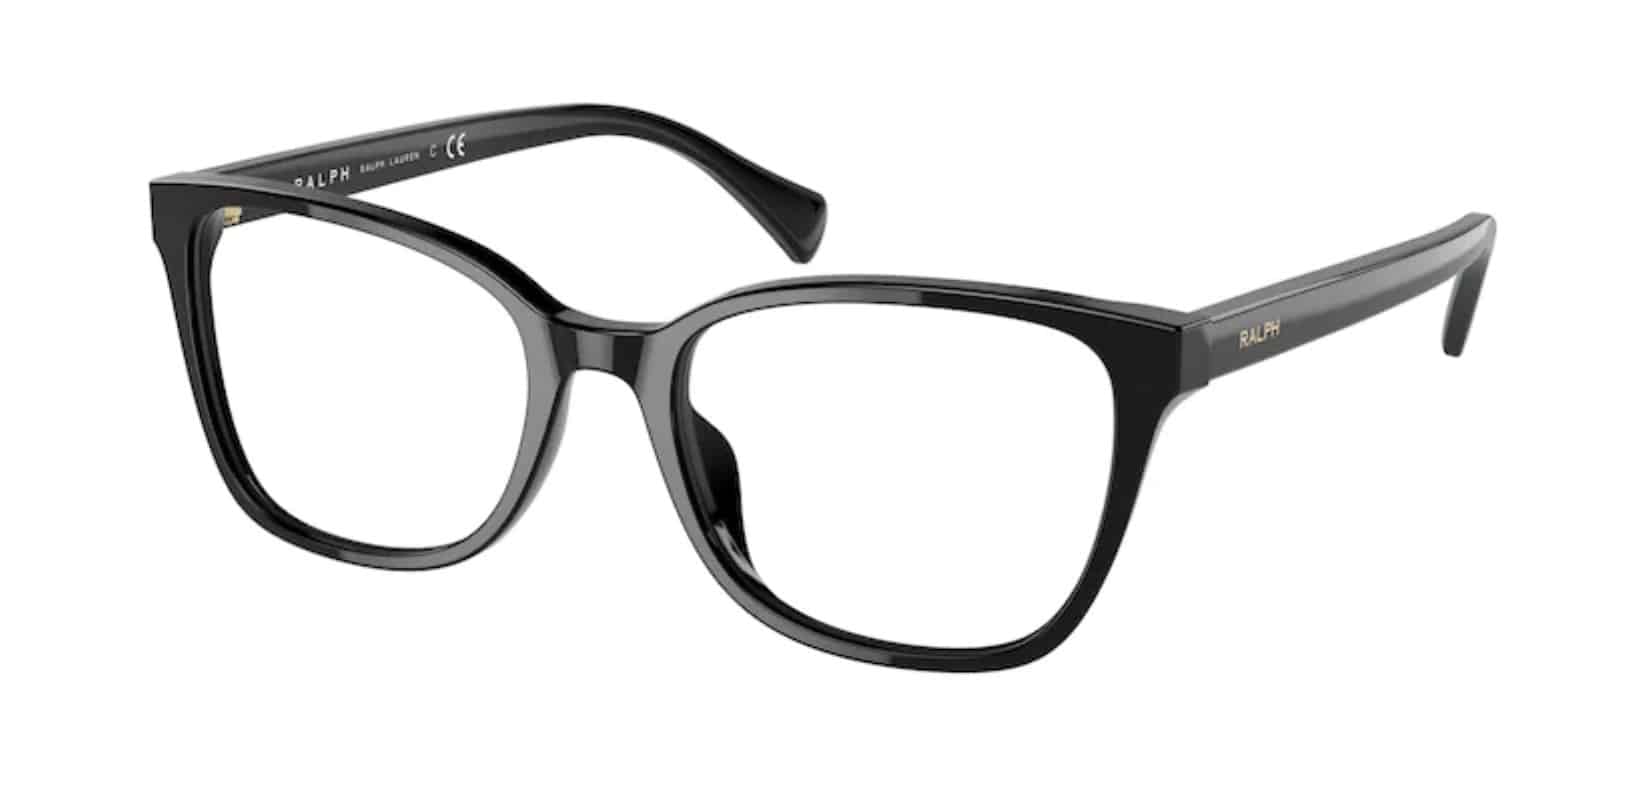 Ralph RA7137U Prescription Eyeglasses - SafetyGearPro.com